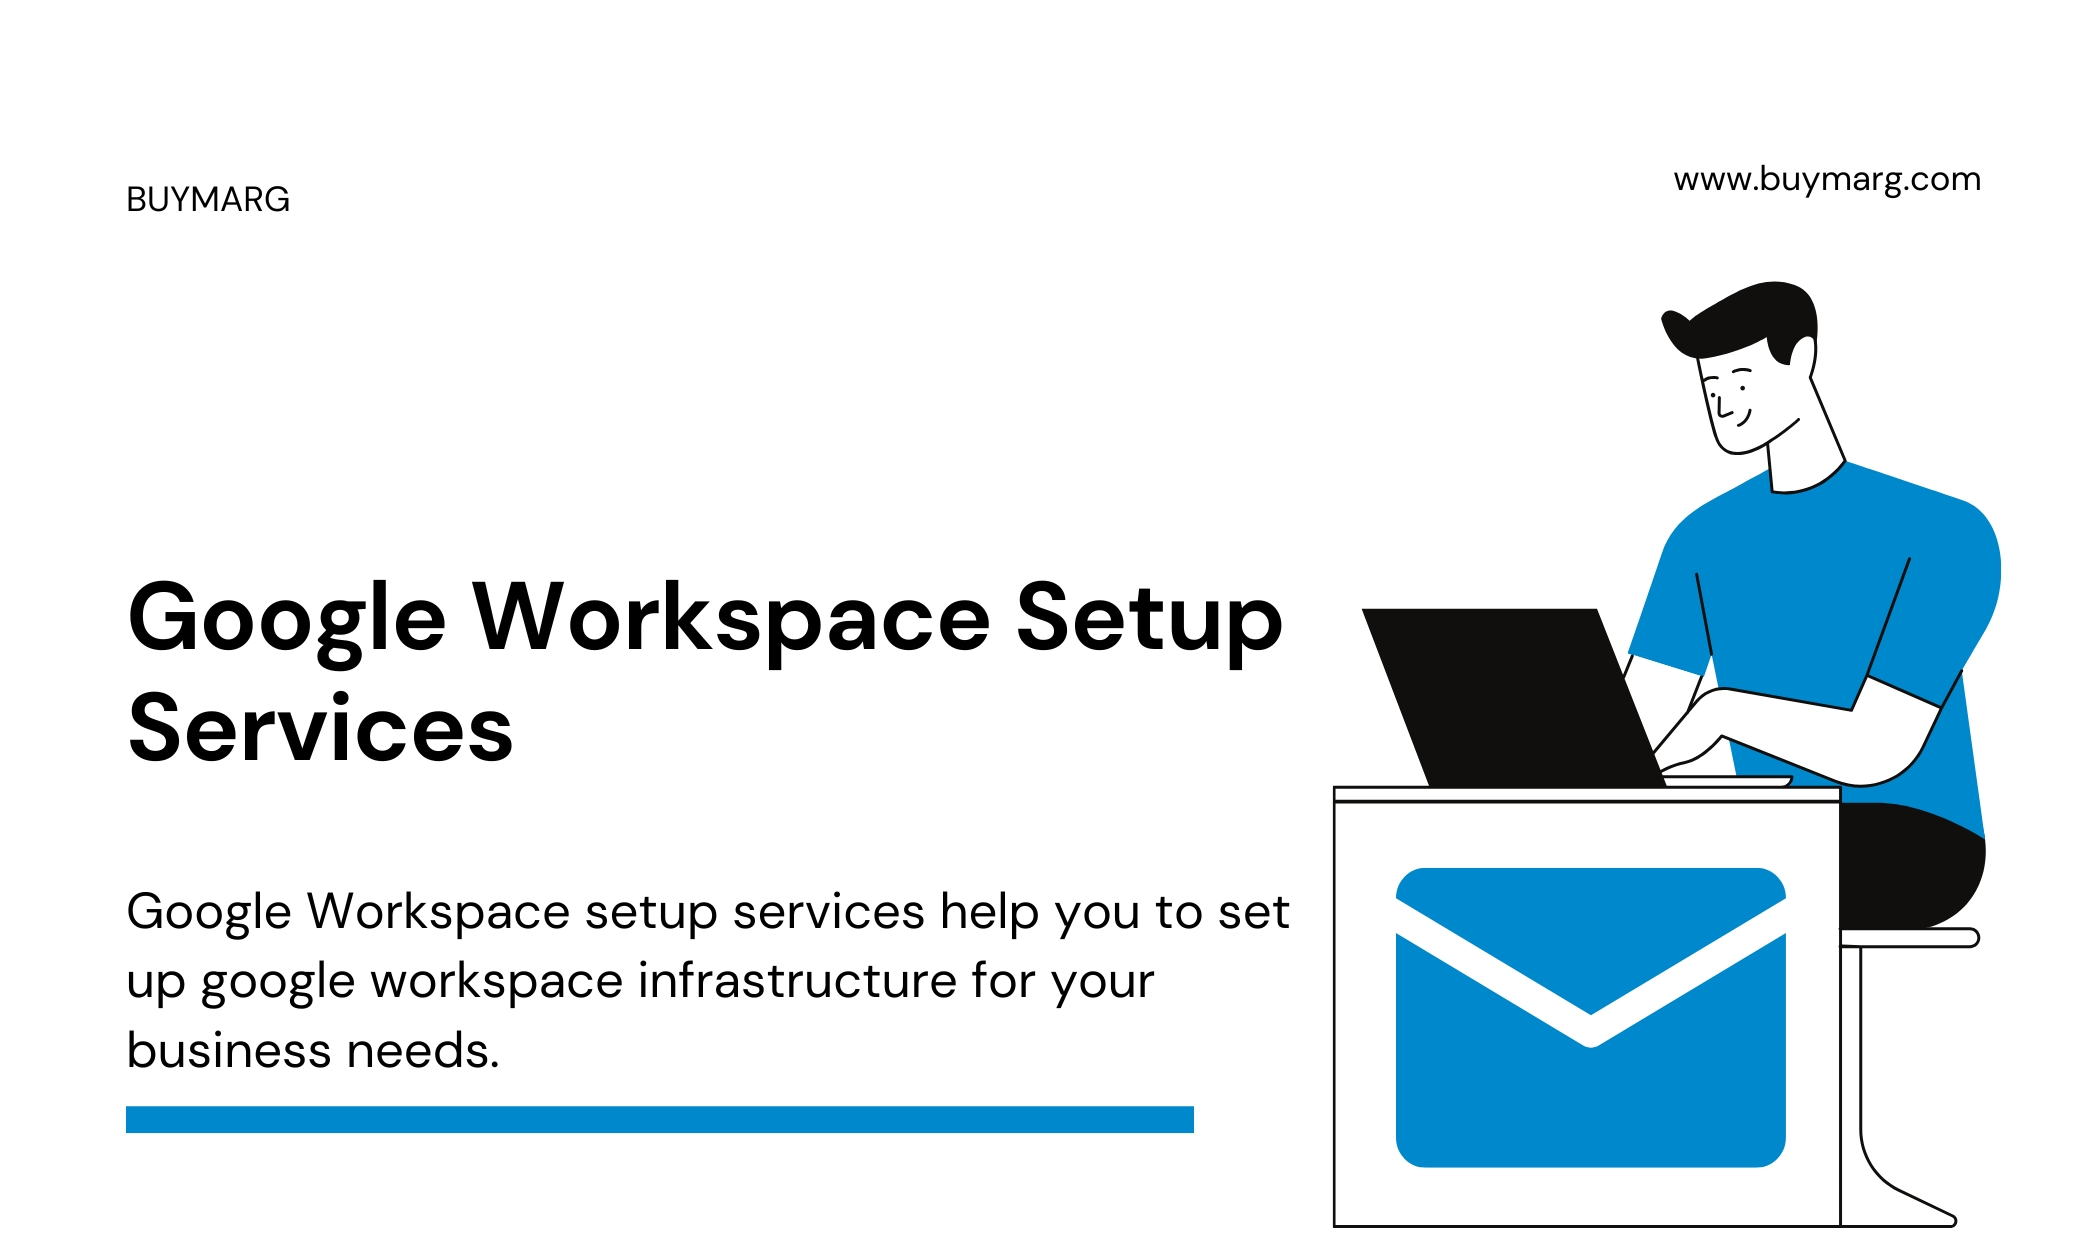 Google Workspace Setup Services